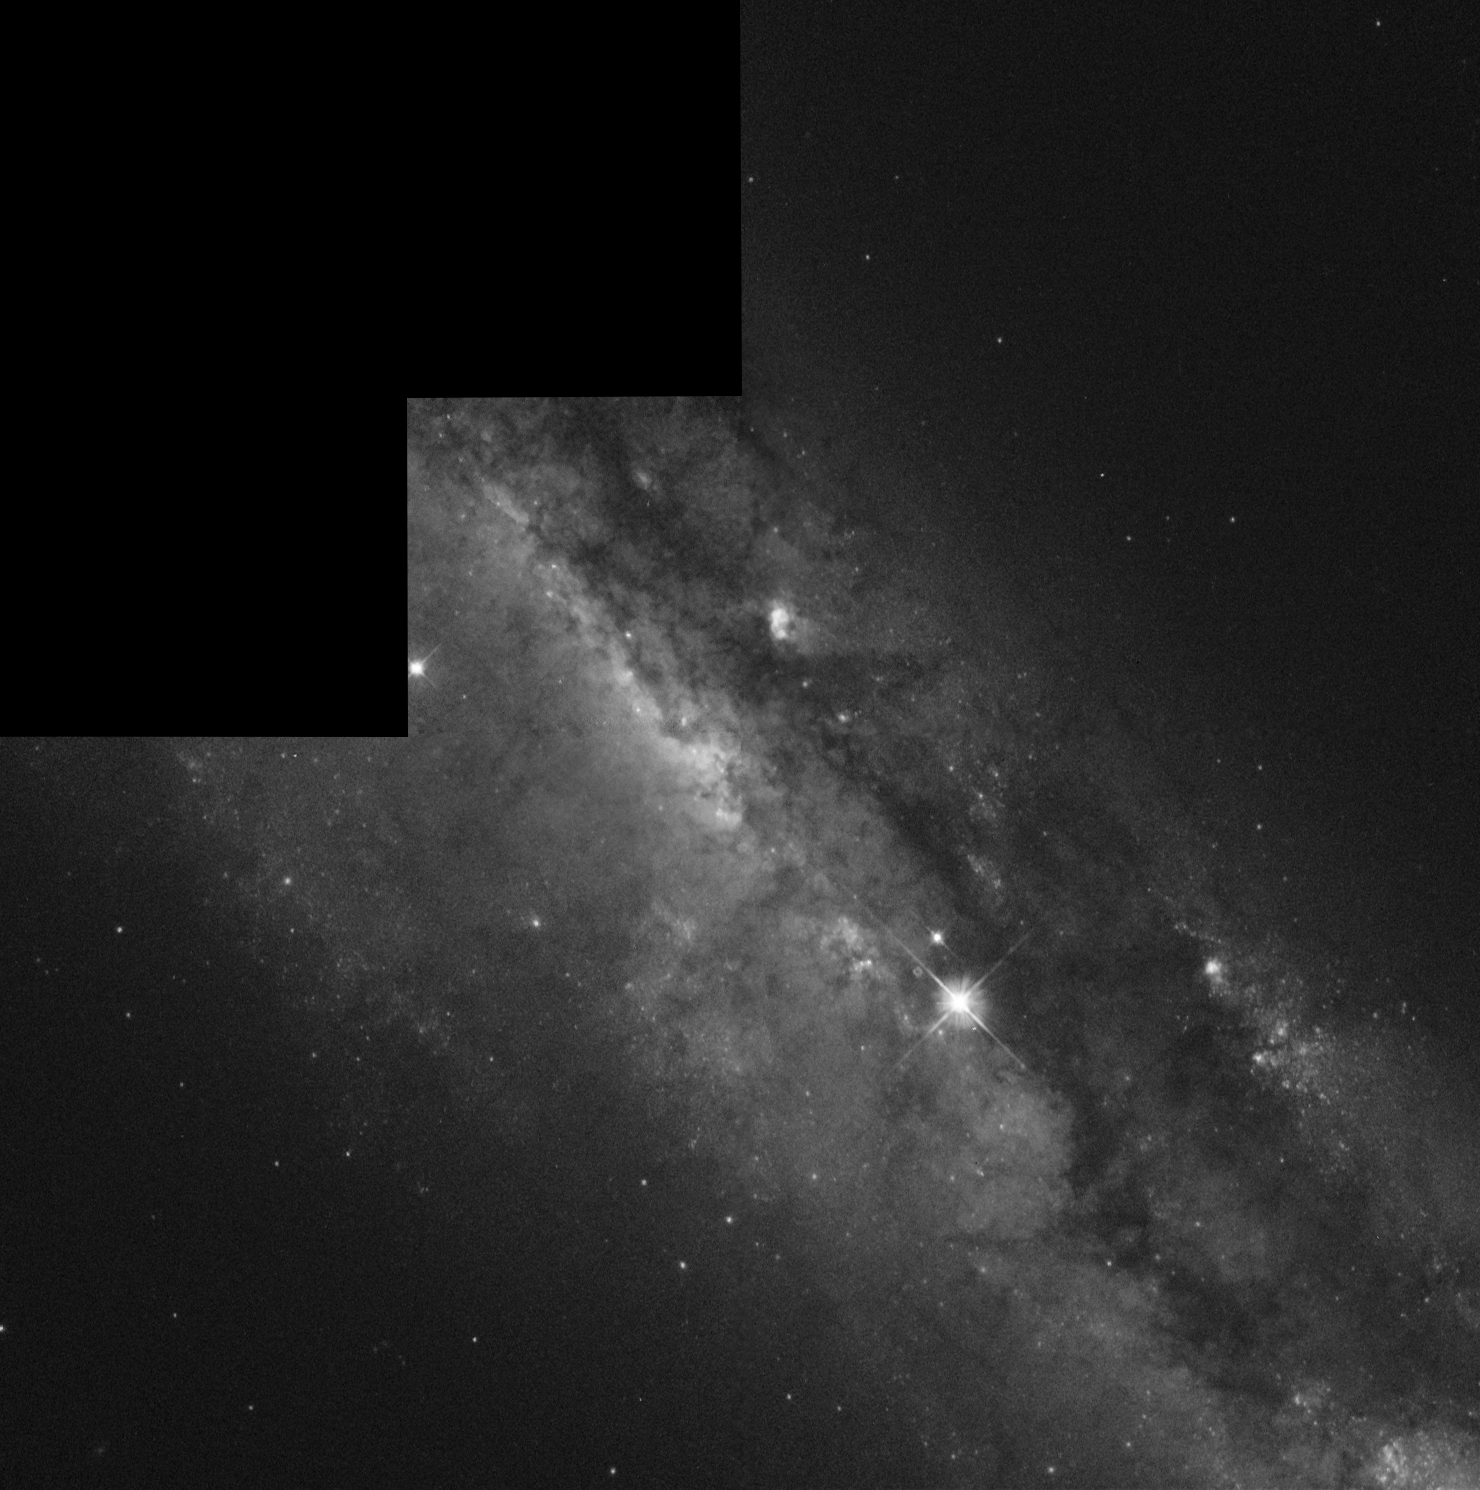 Hubble image of M108